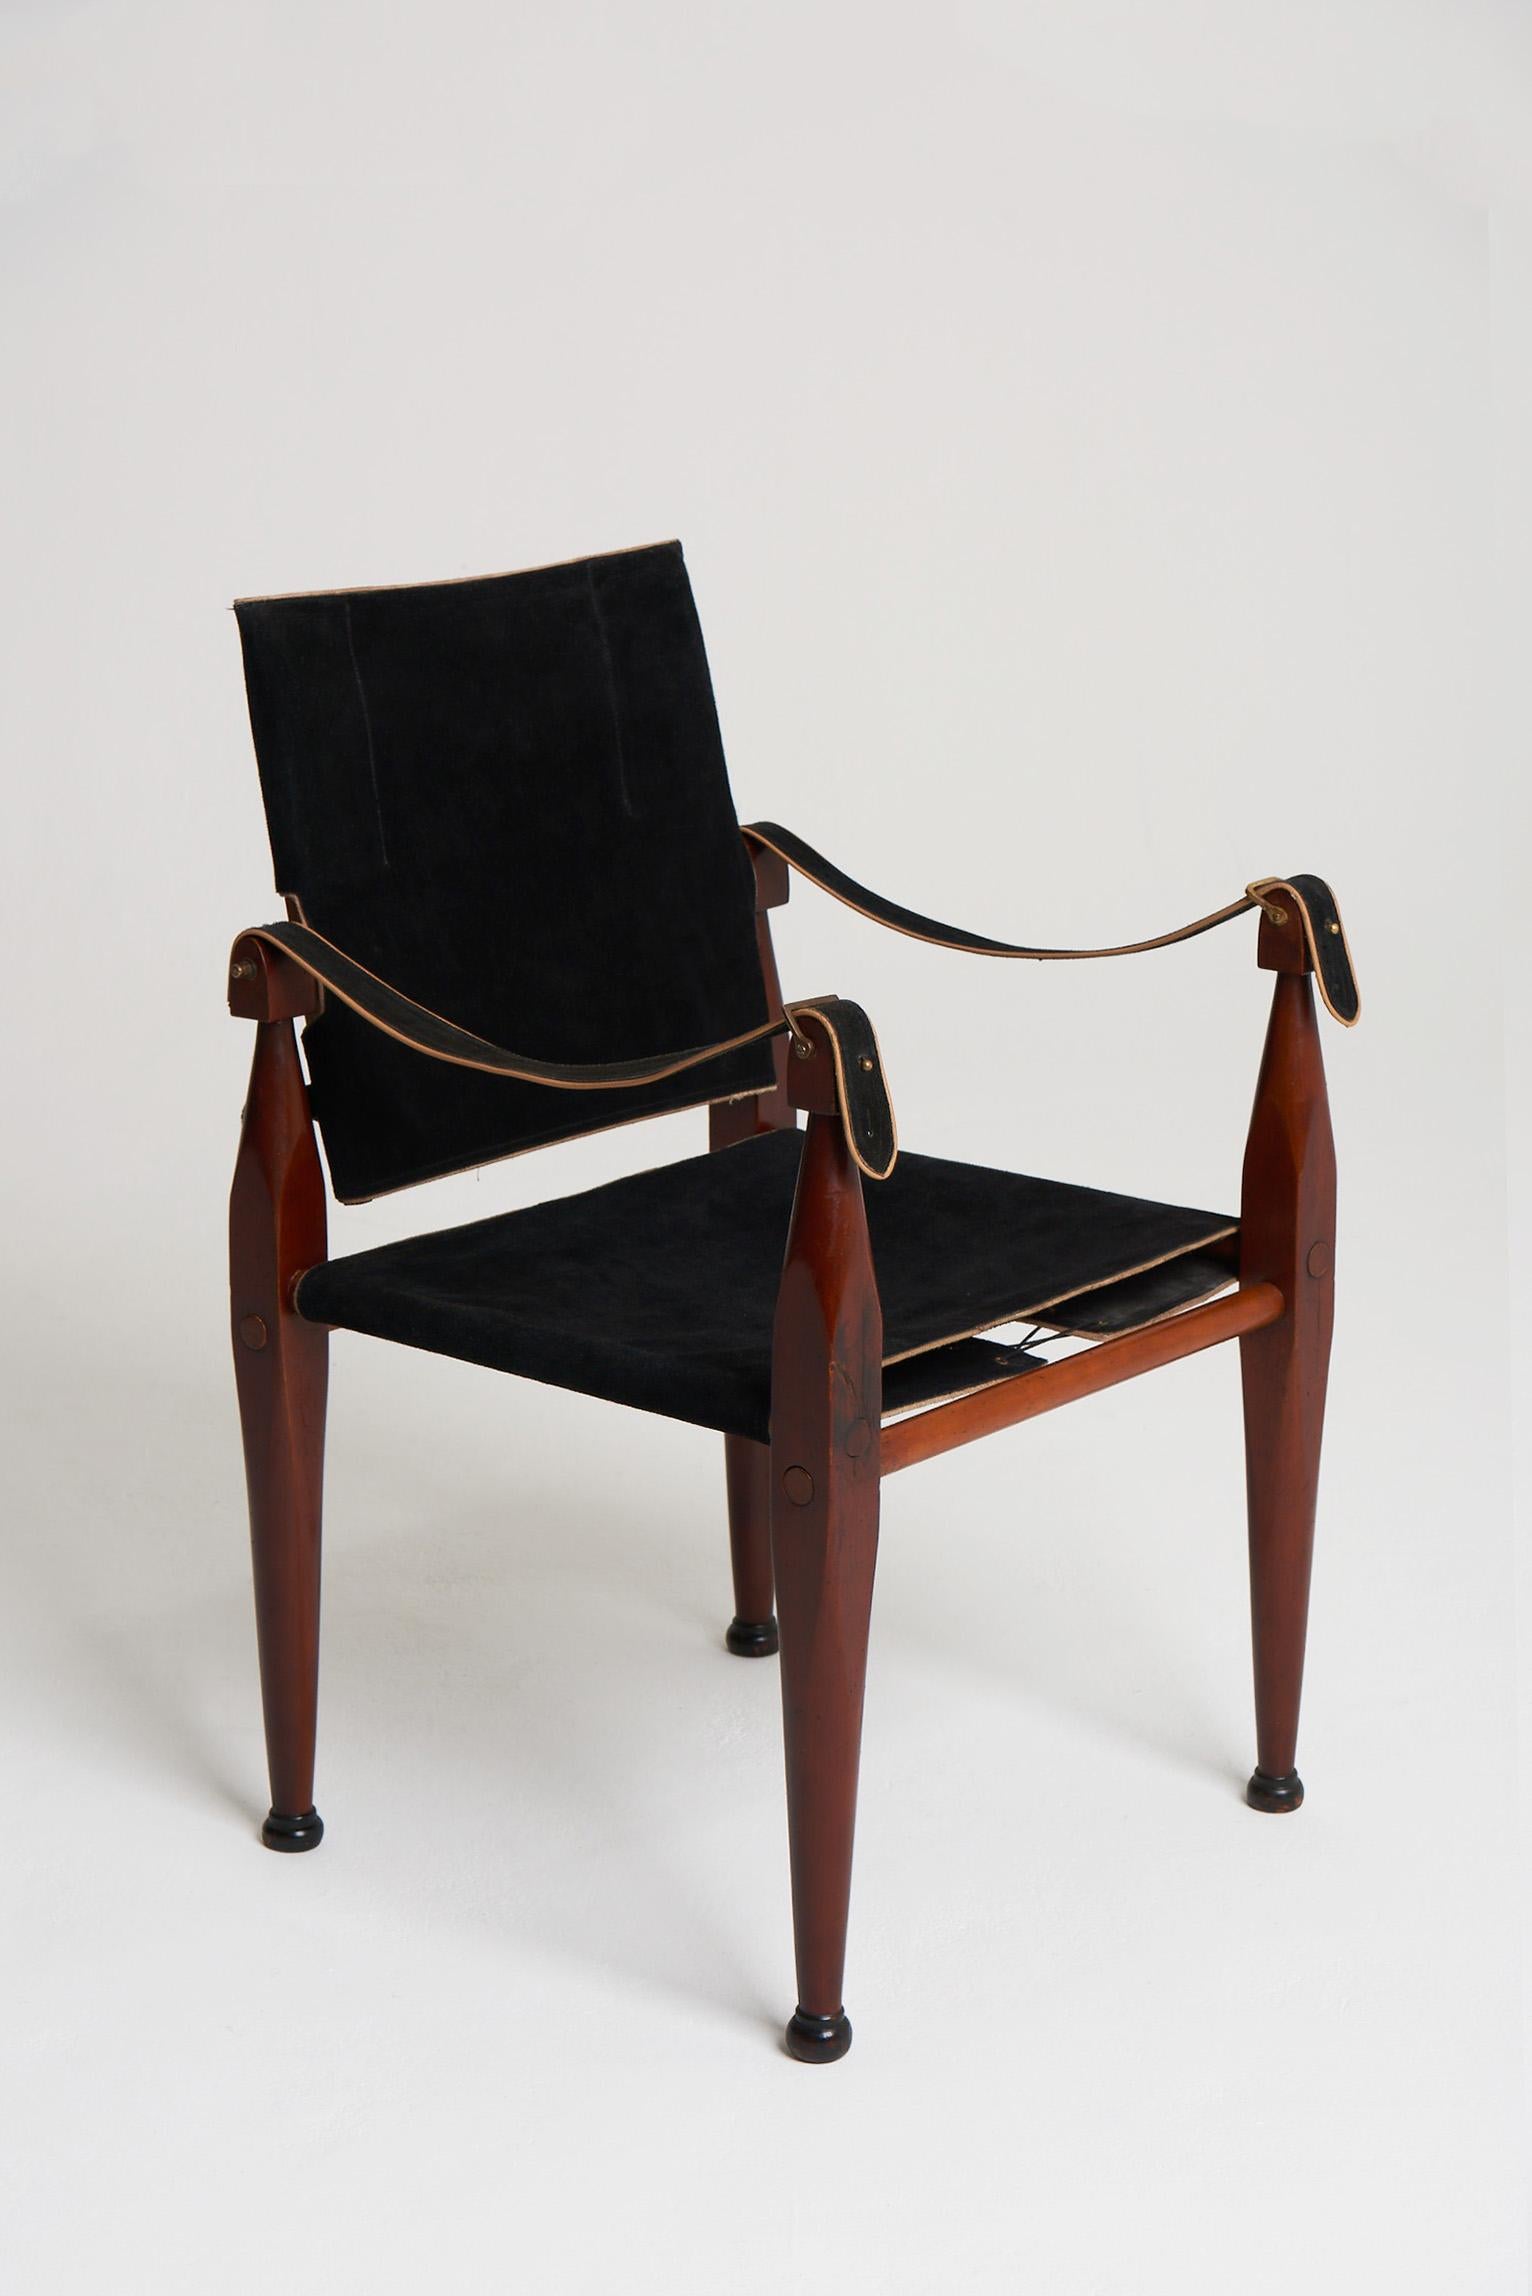 A Mid-Century teak and black suede safari chair.
Northern Europe, Circa 1950.